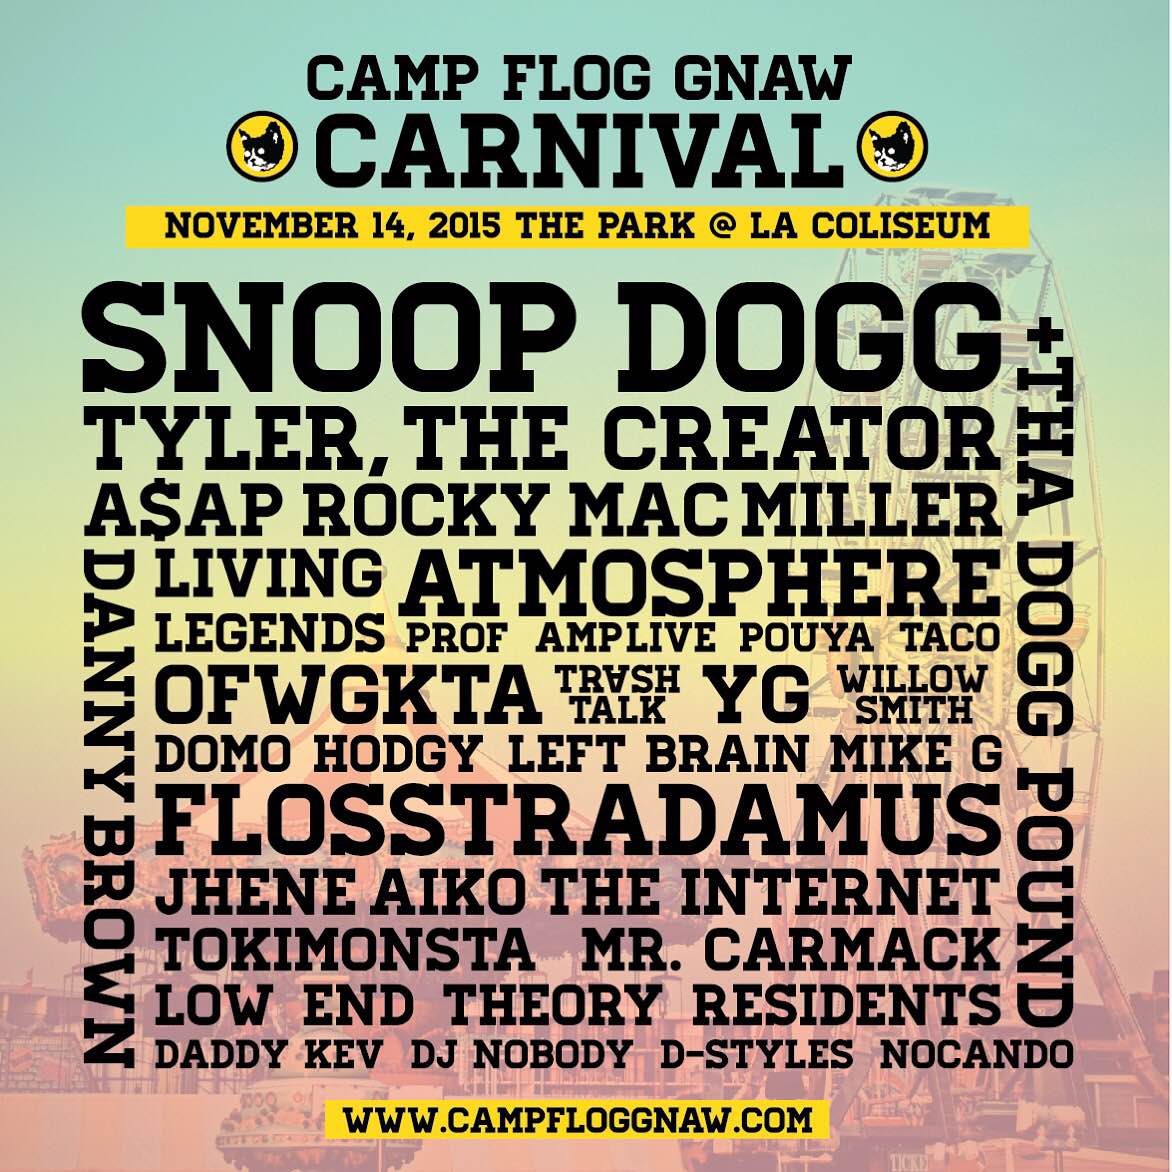 big snoop dogg live on stage headlinin #campfloggnaw nov 14 !! tix here: http://t.co/p7zQkf7JDW http://t.co/yBsYNWK9Yx